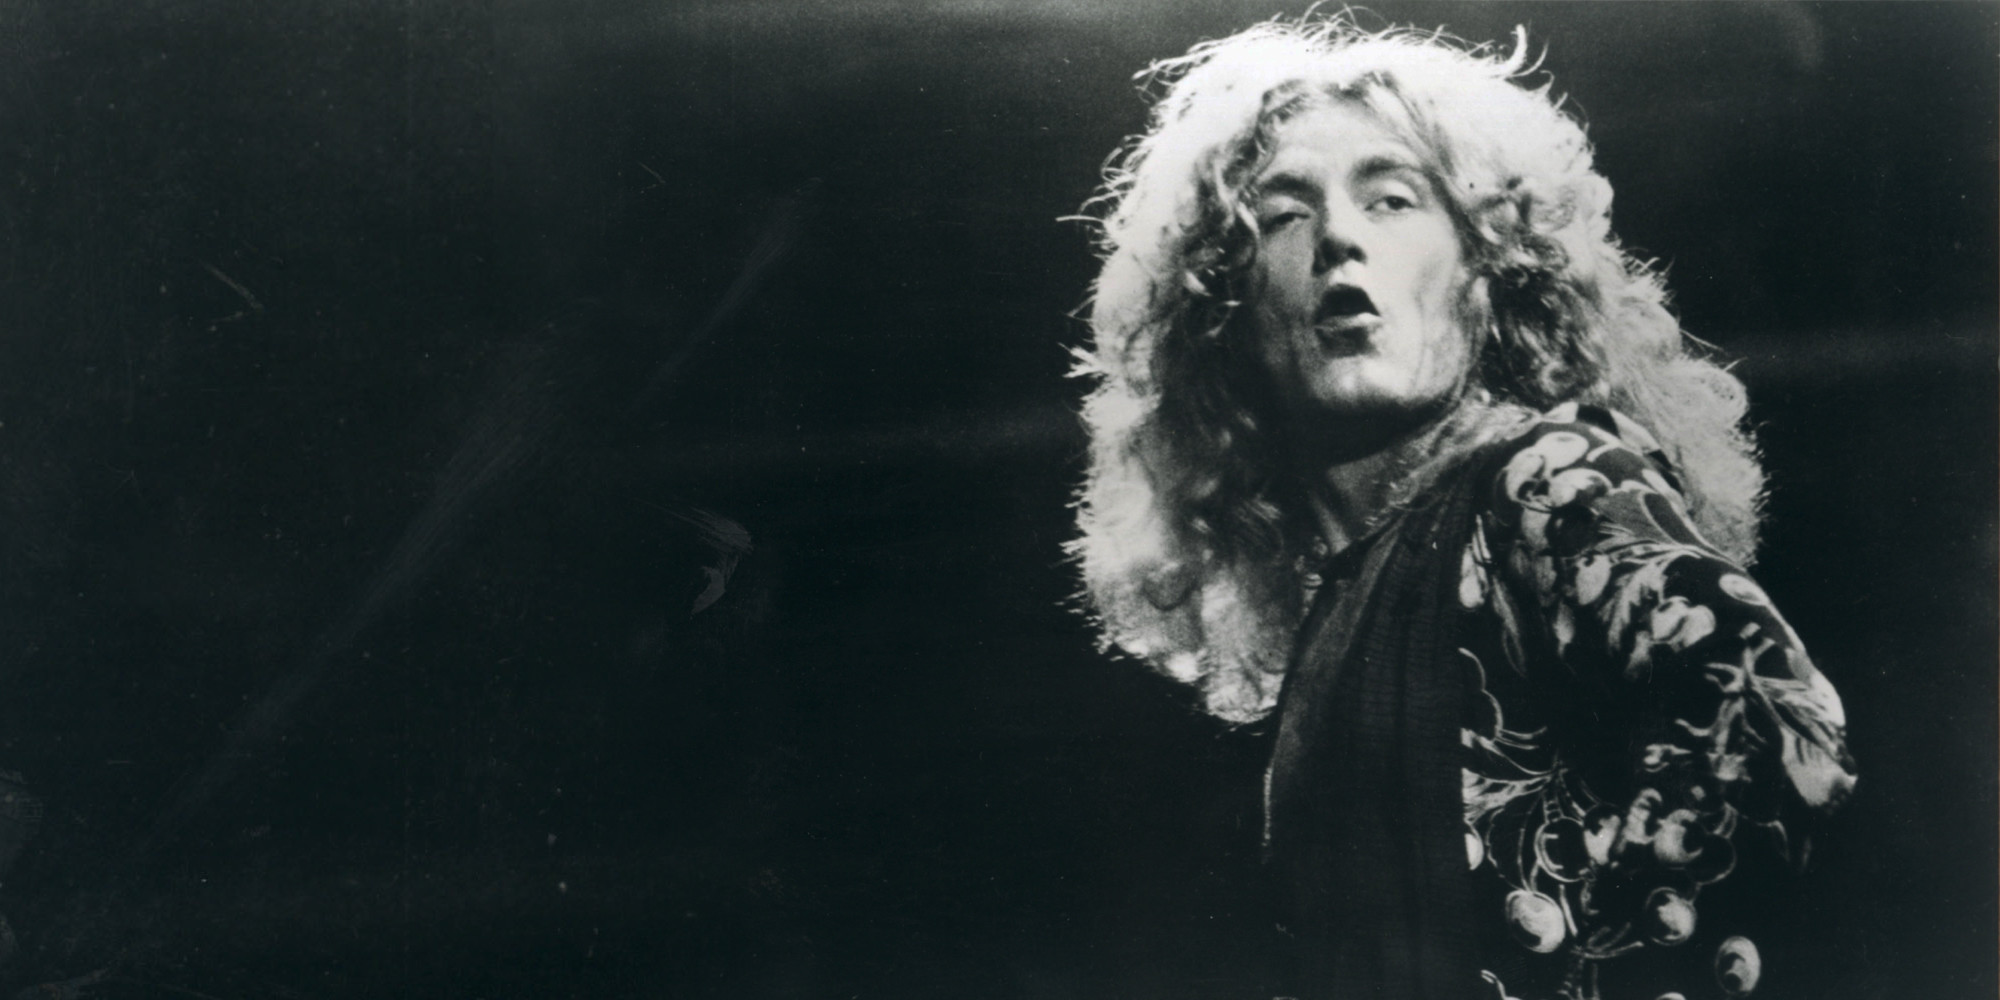 Robert Plant Pics, Music Collection